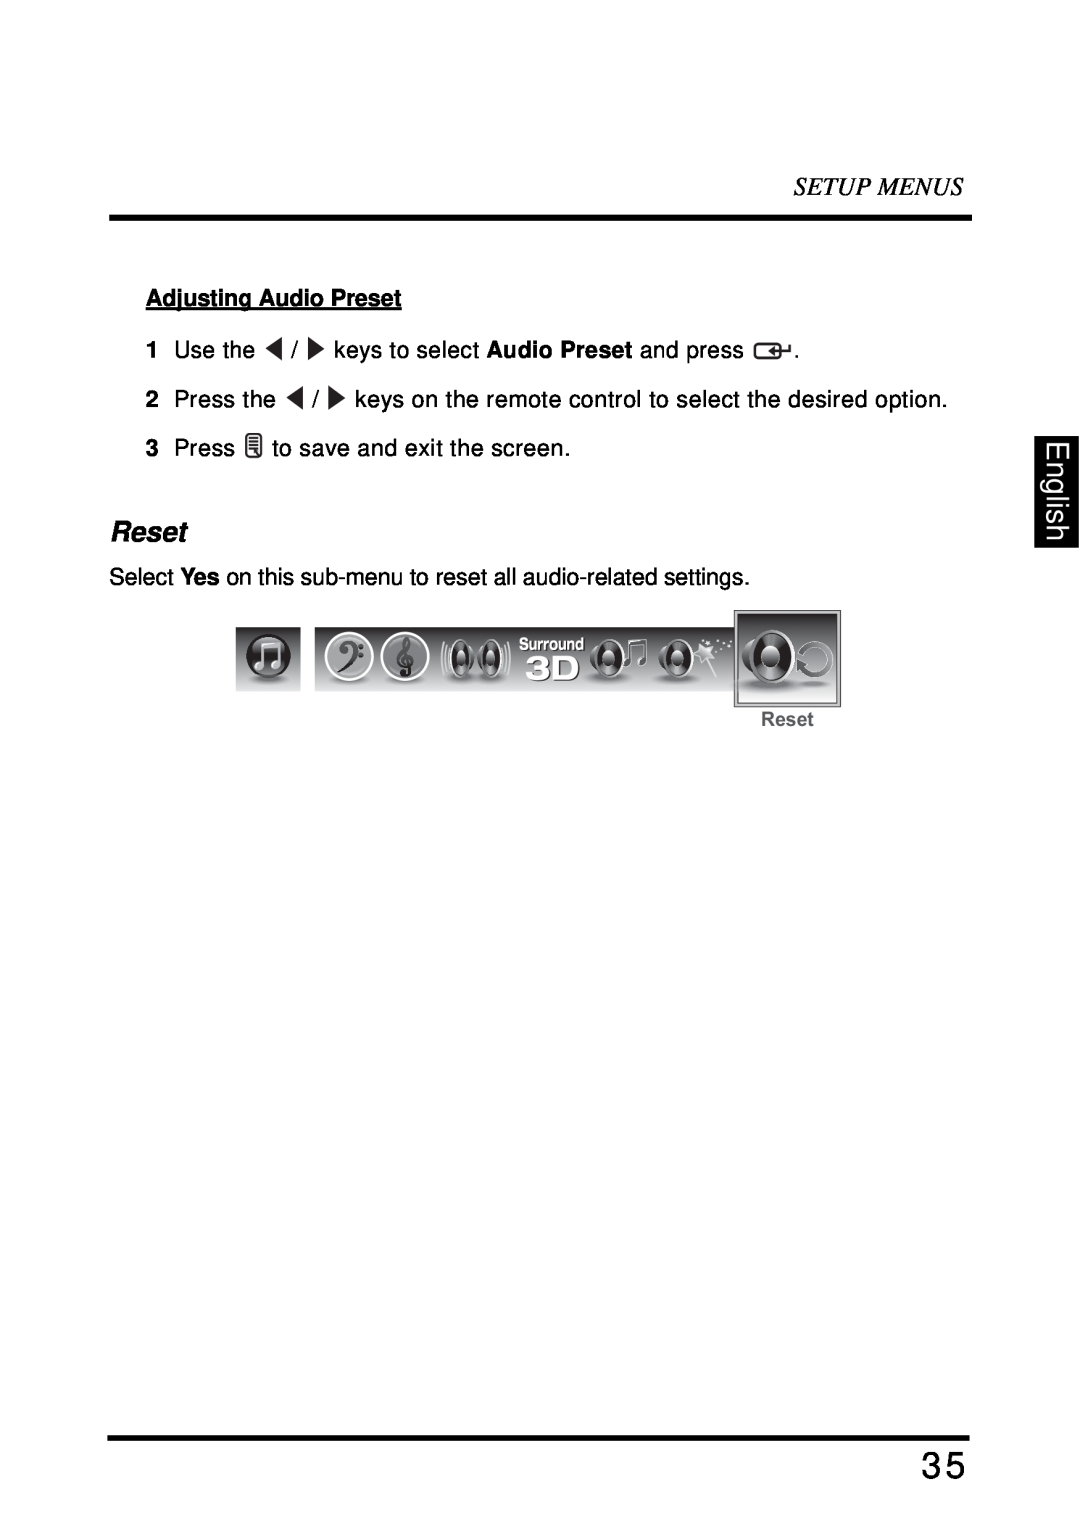 Westinghouse LD-4680 user manual English, Reset, Setup Menus, Adjusting Audio Preset 